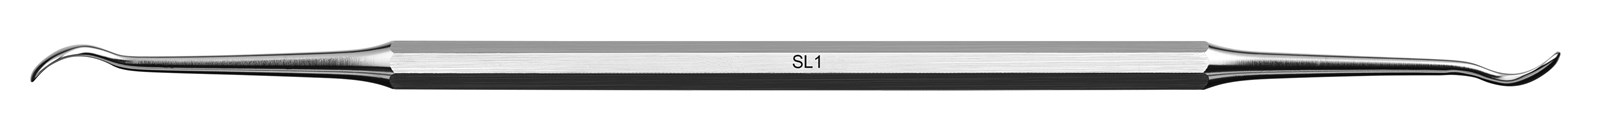 Instrument pro sinus lift - SL1, ADEP světle zelený